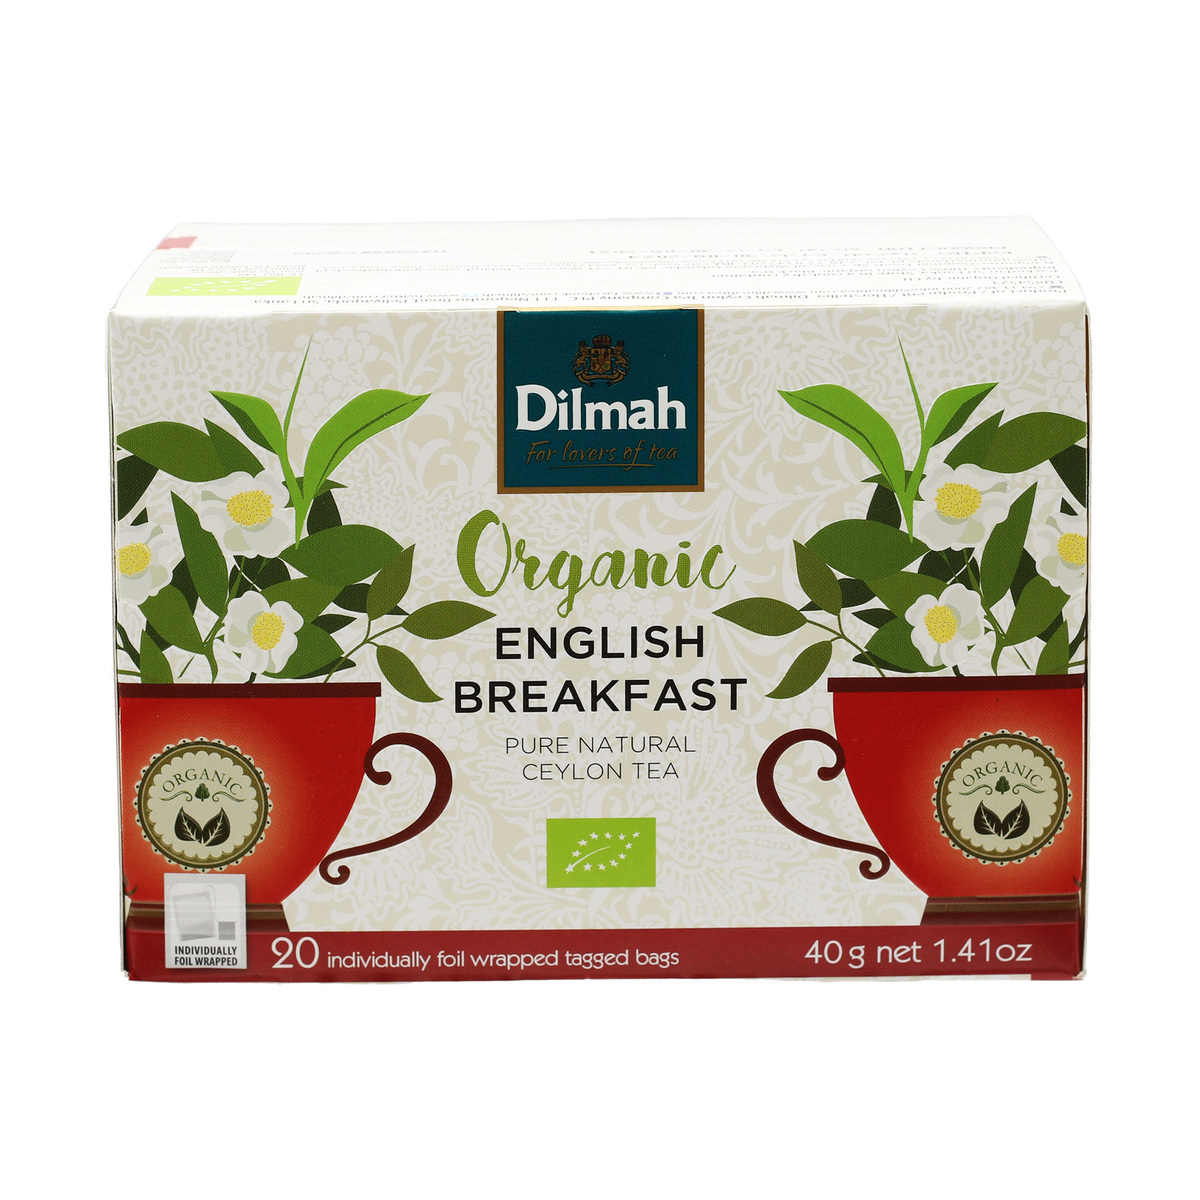 Dilmah Organic English Breakfast Tea 20 x 40g